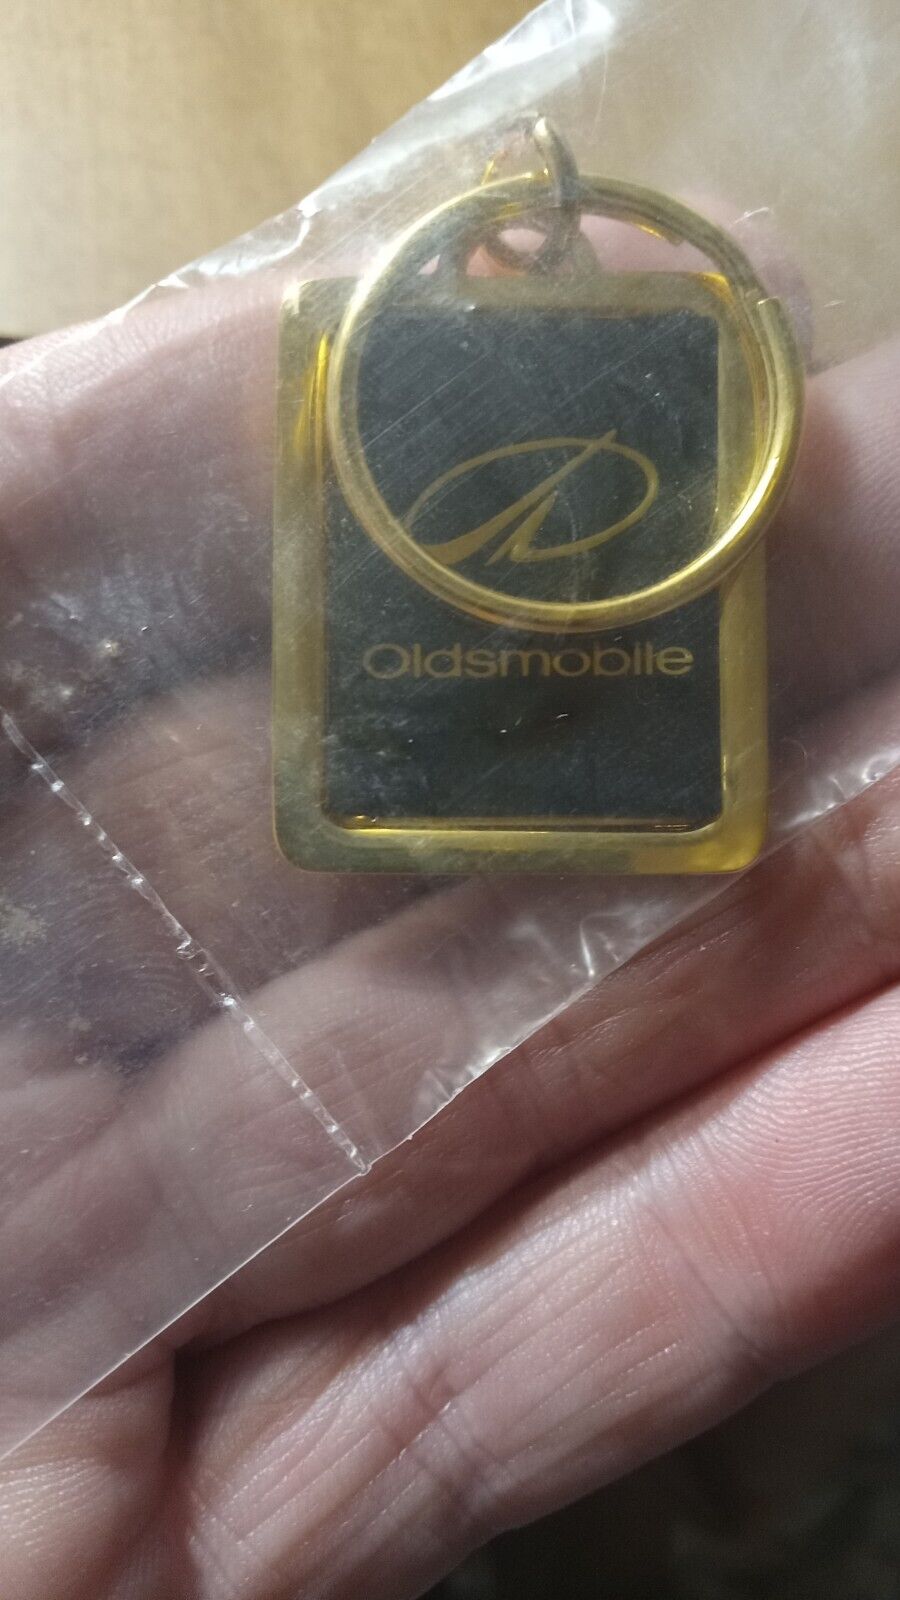 Oldsmobile Metal Keychain NOS Sealed